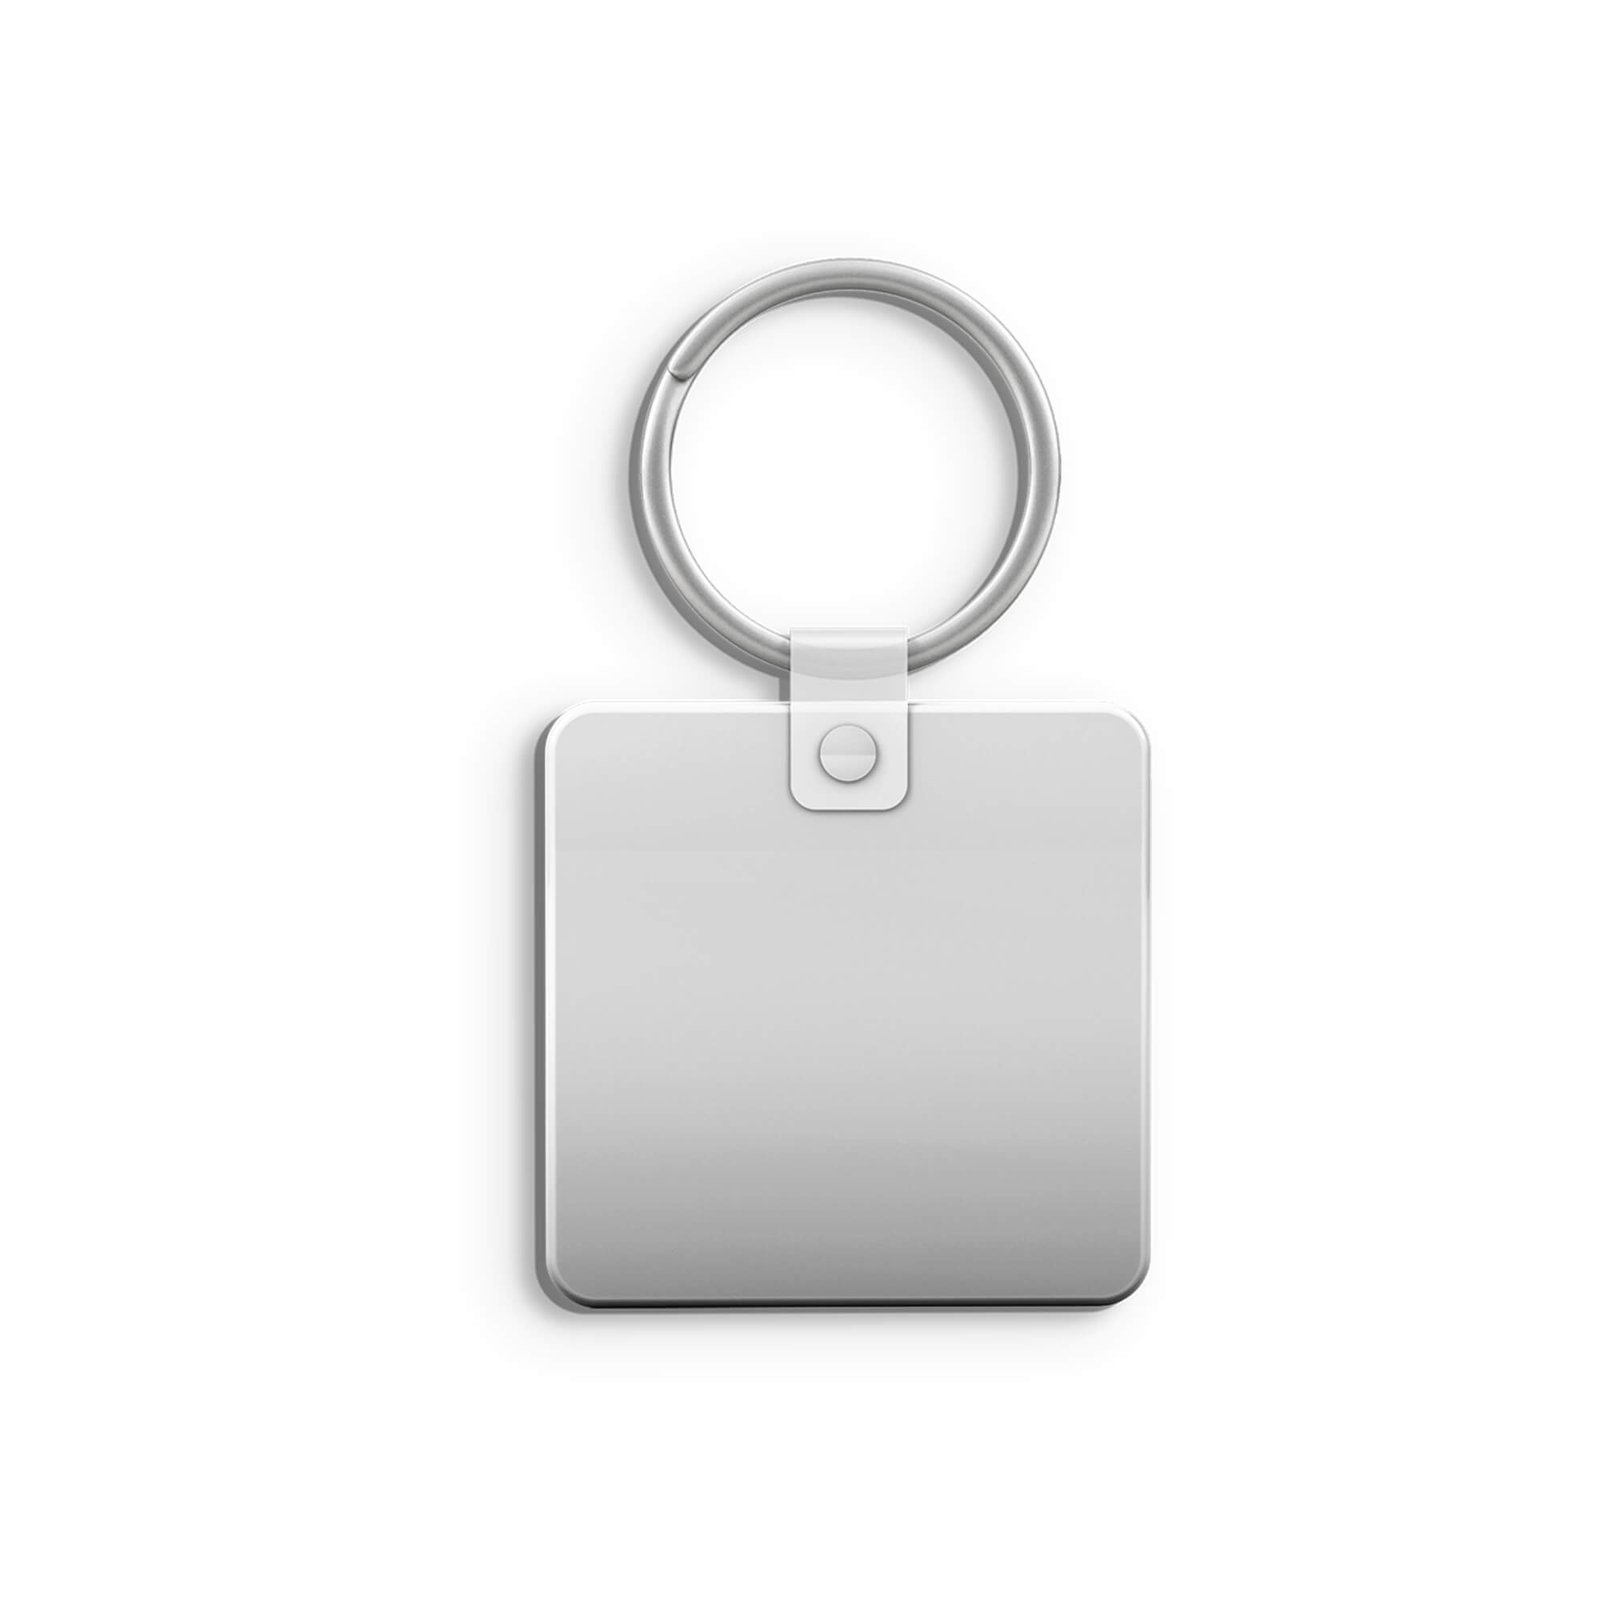 Blank Free Keychain Mockup PSD Template